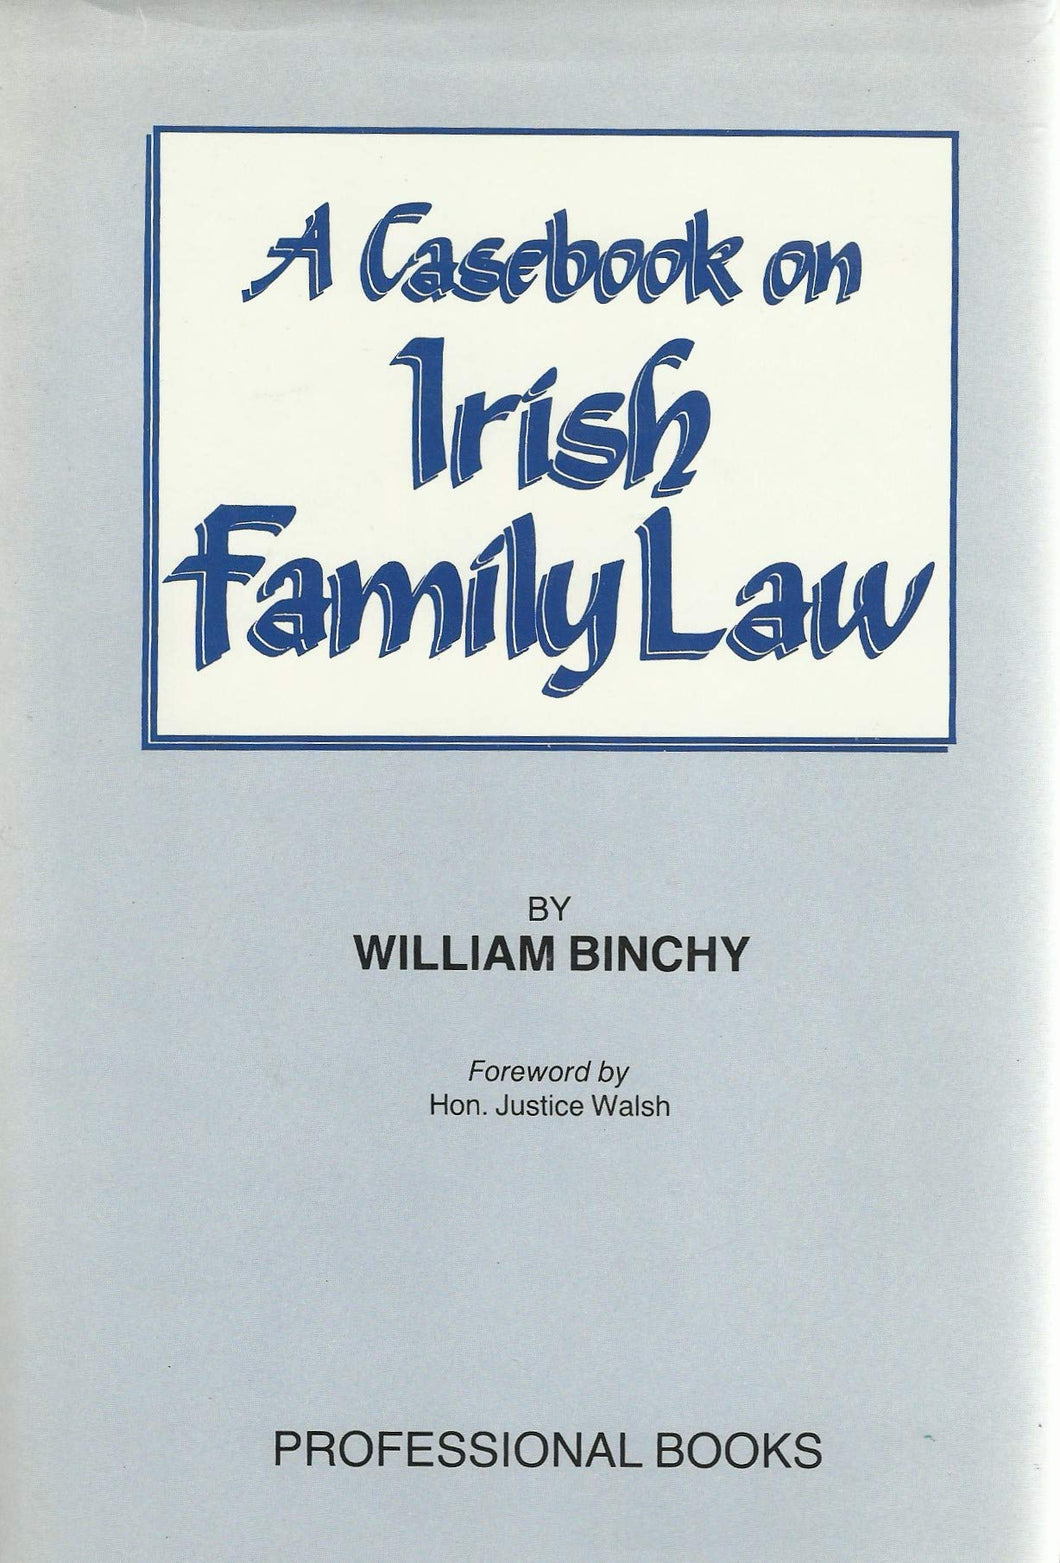 Casebook on Irish Family Law, A